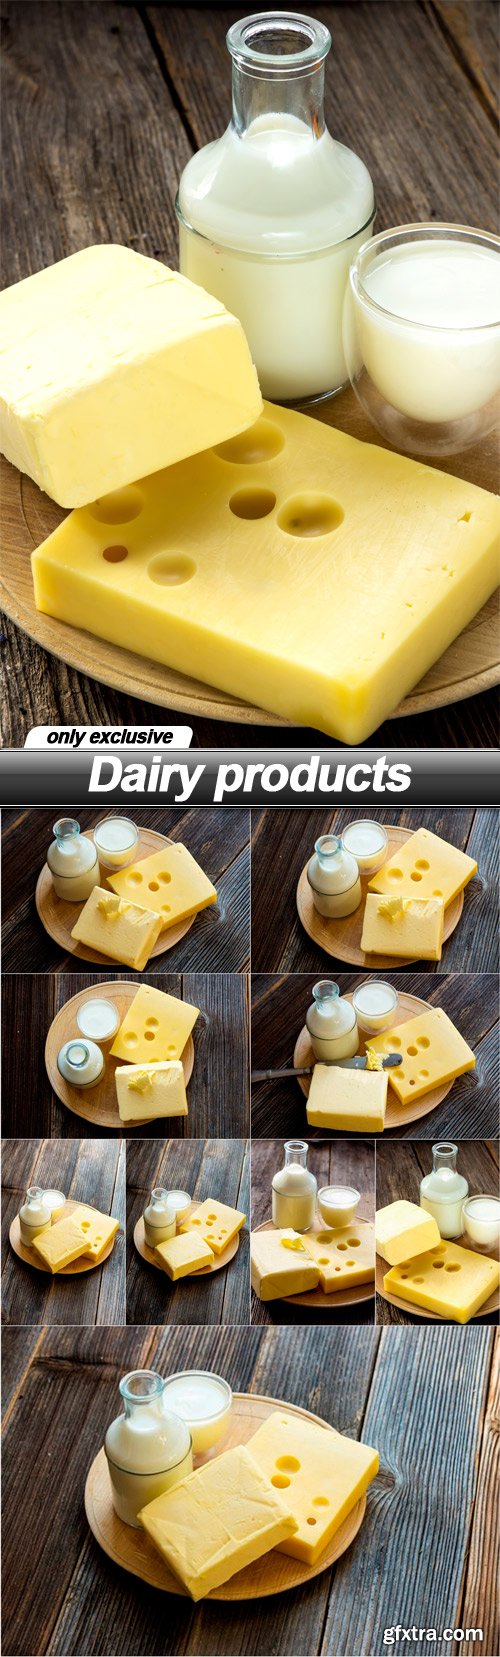 Dairy products - 9 UHQ JPEG